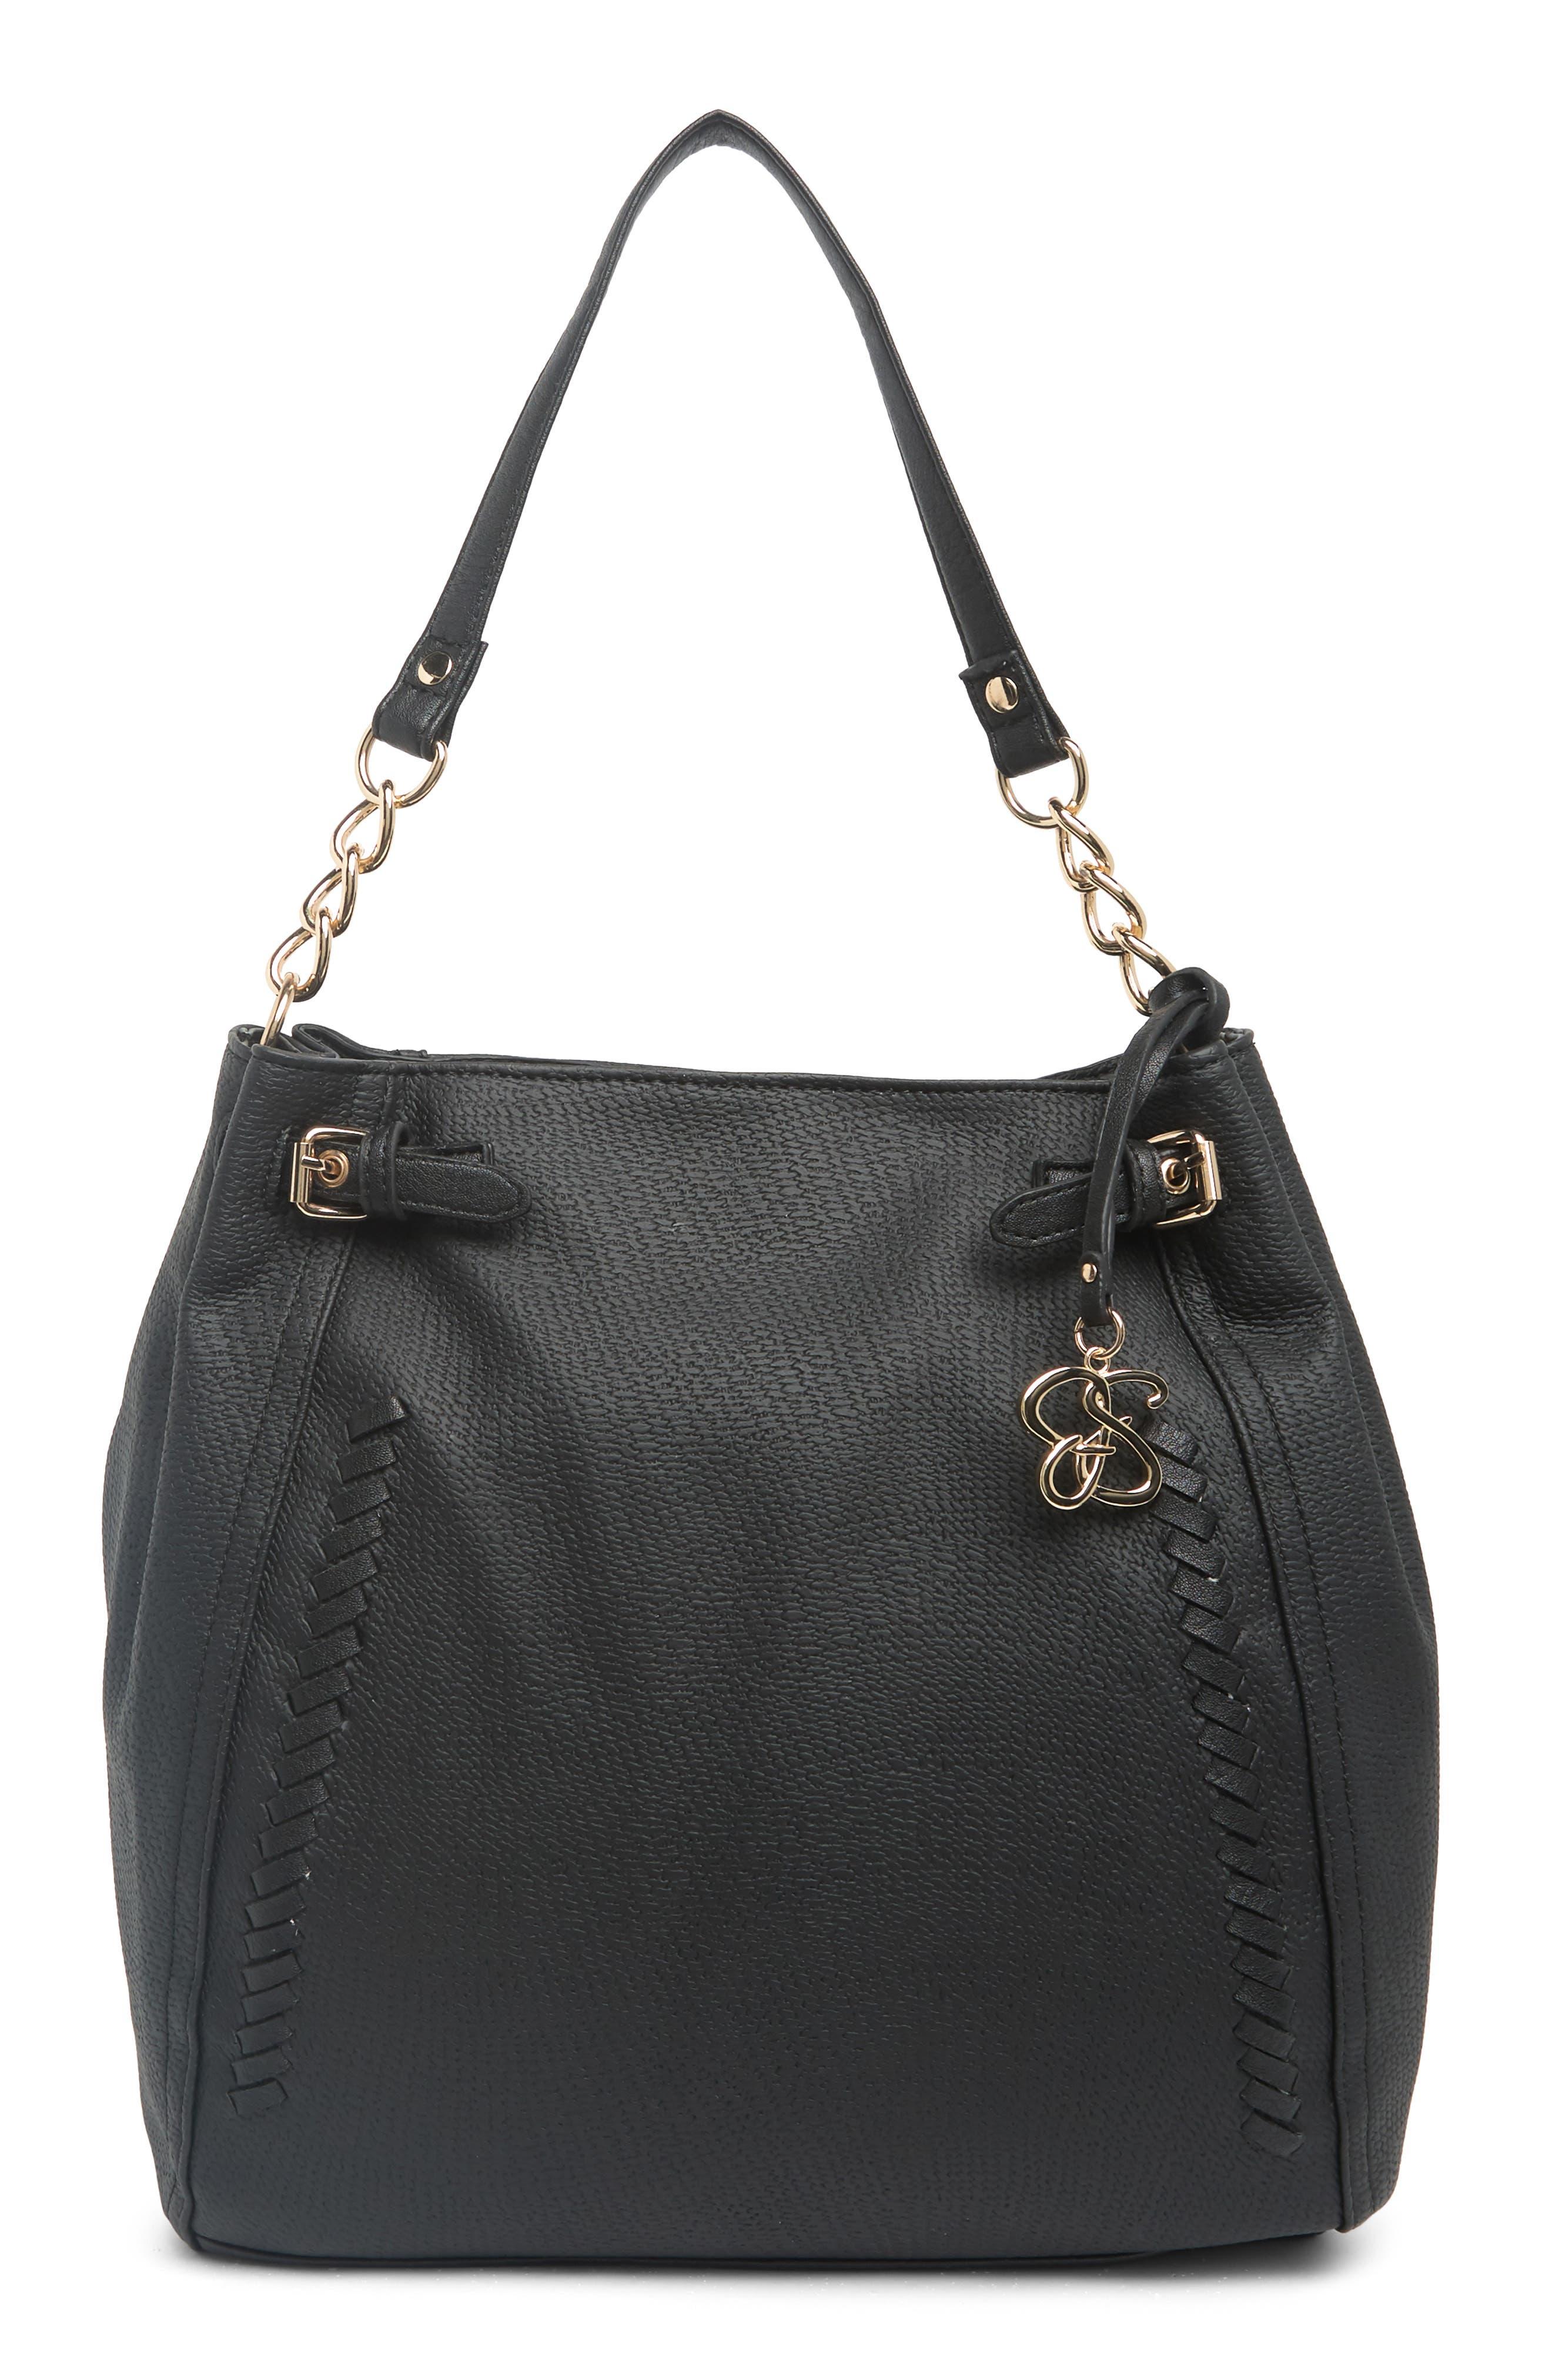 Jessica Simpson Kendall Hobo Bag, Accessorising - Brand Name / Designer  Handbags For Carry & Wear Share If You Care!